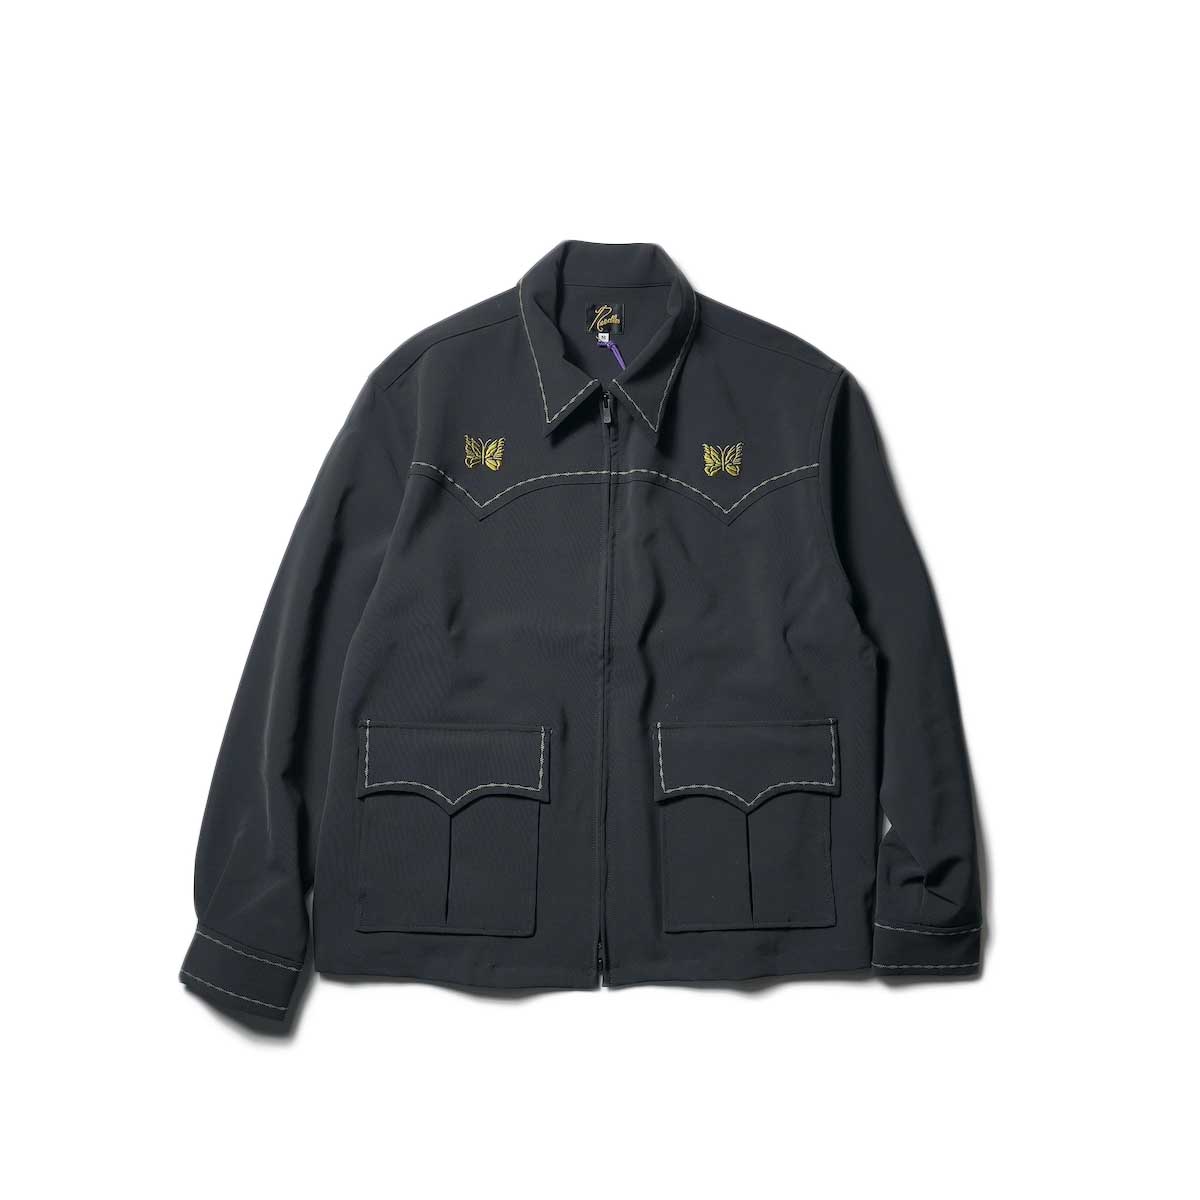 Needles / Western Sport Jacket - PE/PU Double Cloth  (Black)